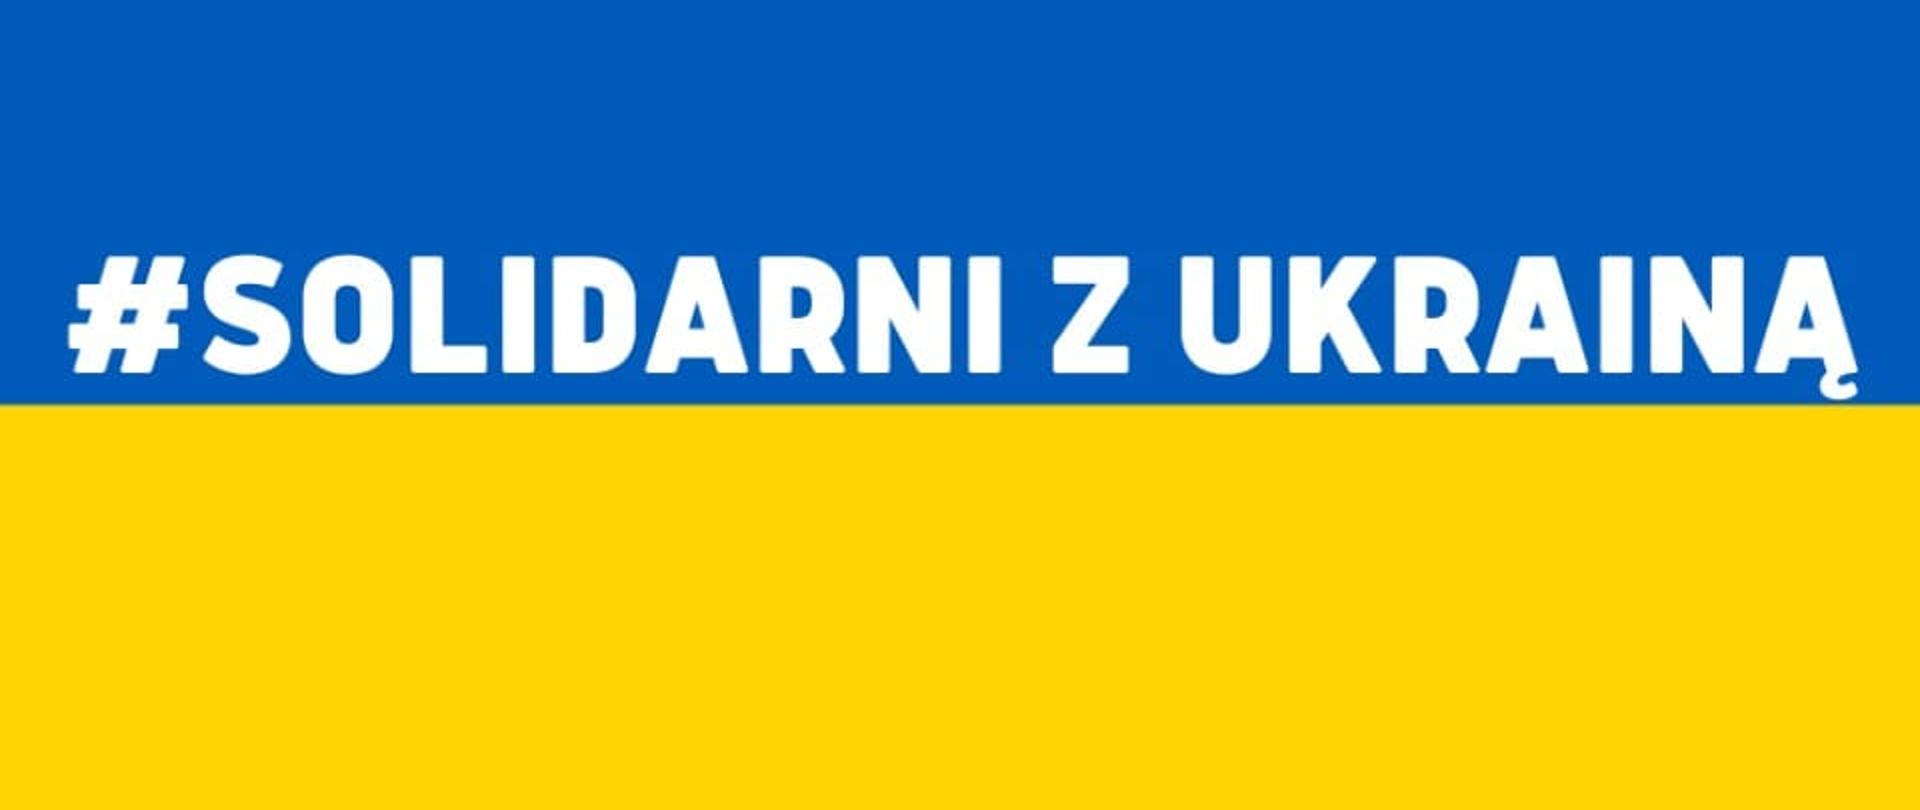 Flaga ukrainy z napisem #SOLIDARNIZUKRAINĄ